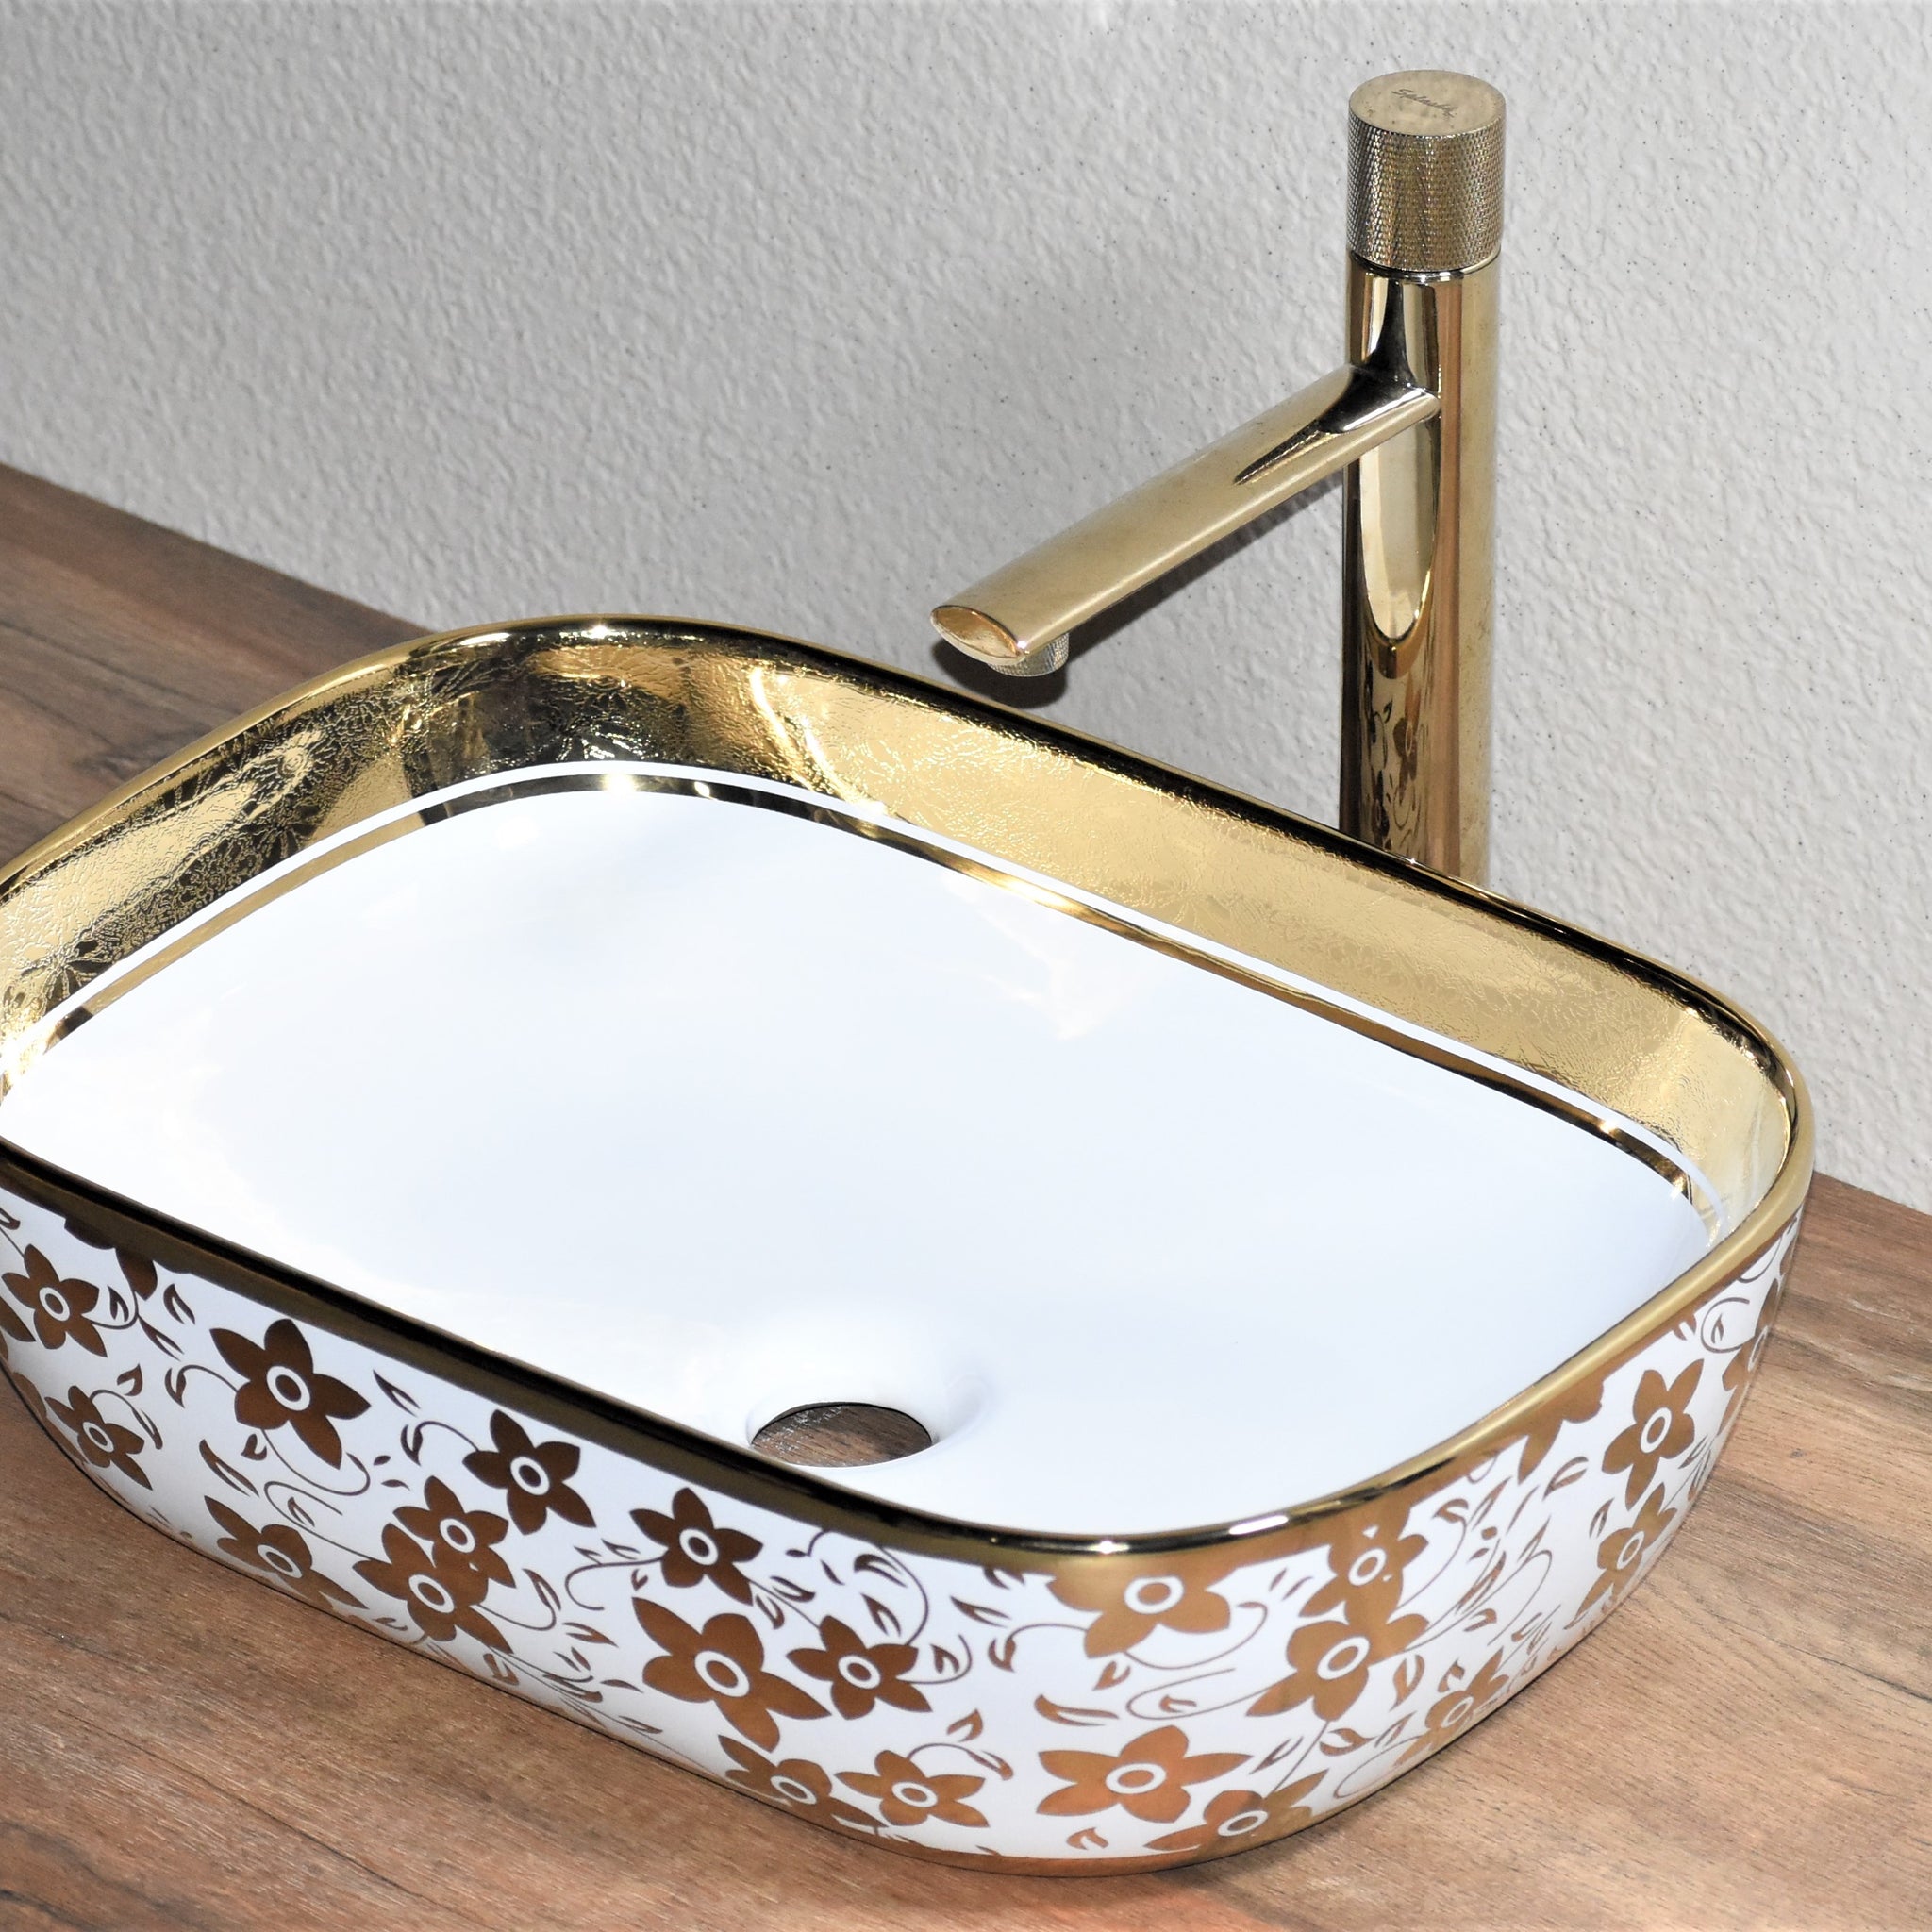 B Backline Ceramic Table Top, Counter Top Wash Basin Gold 45 x 30 CM